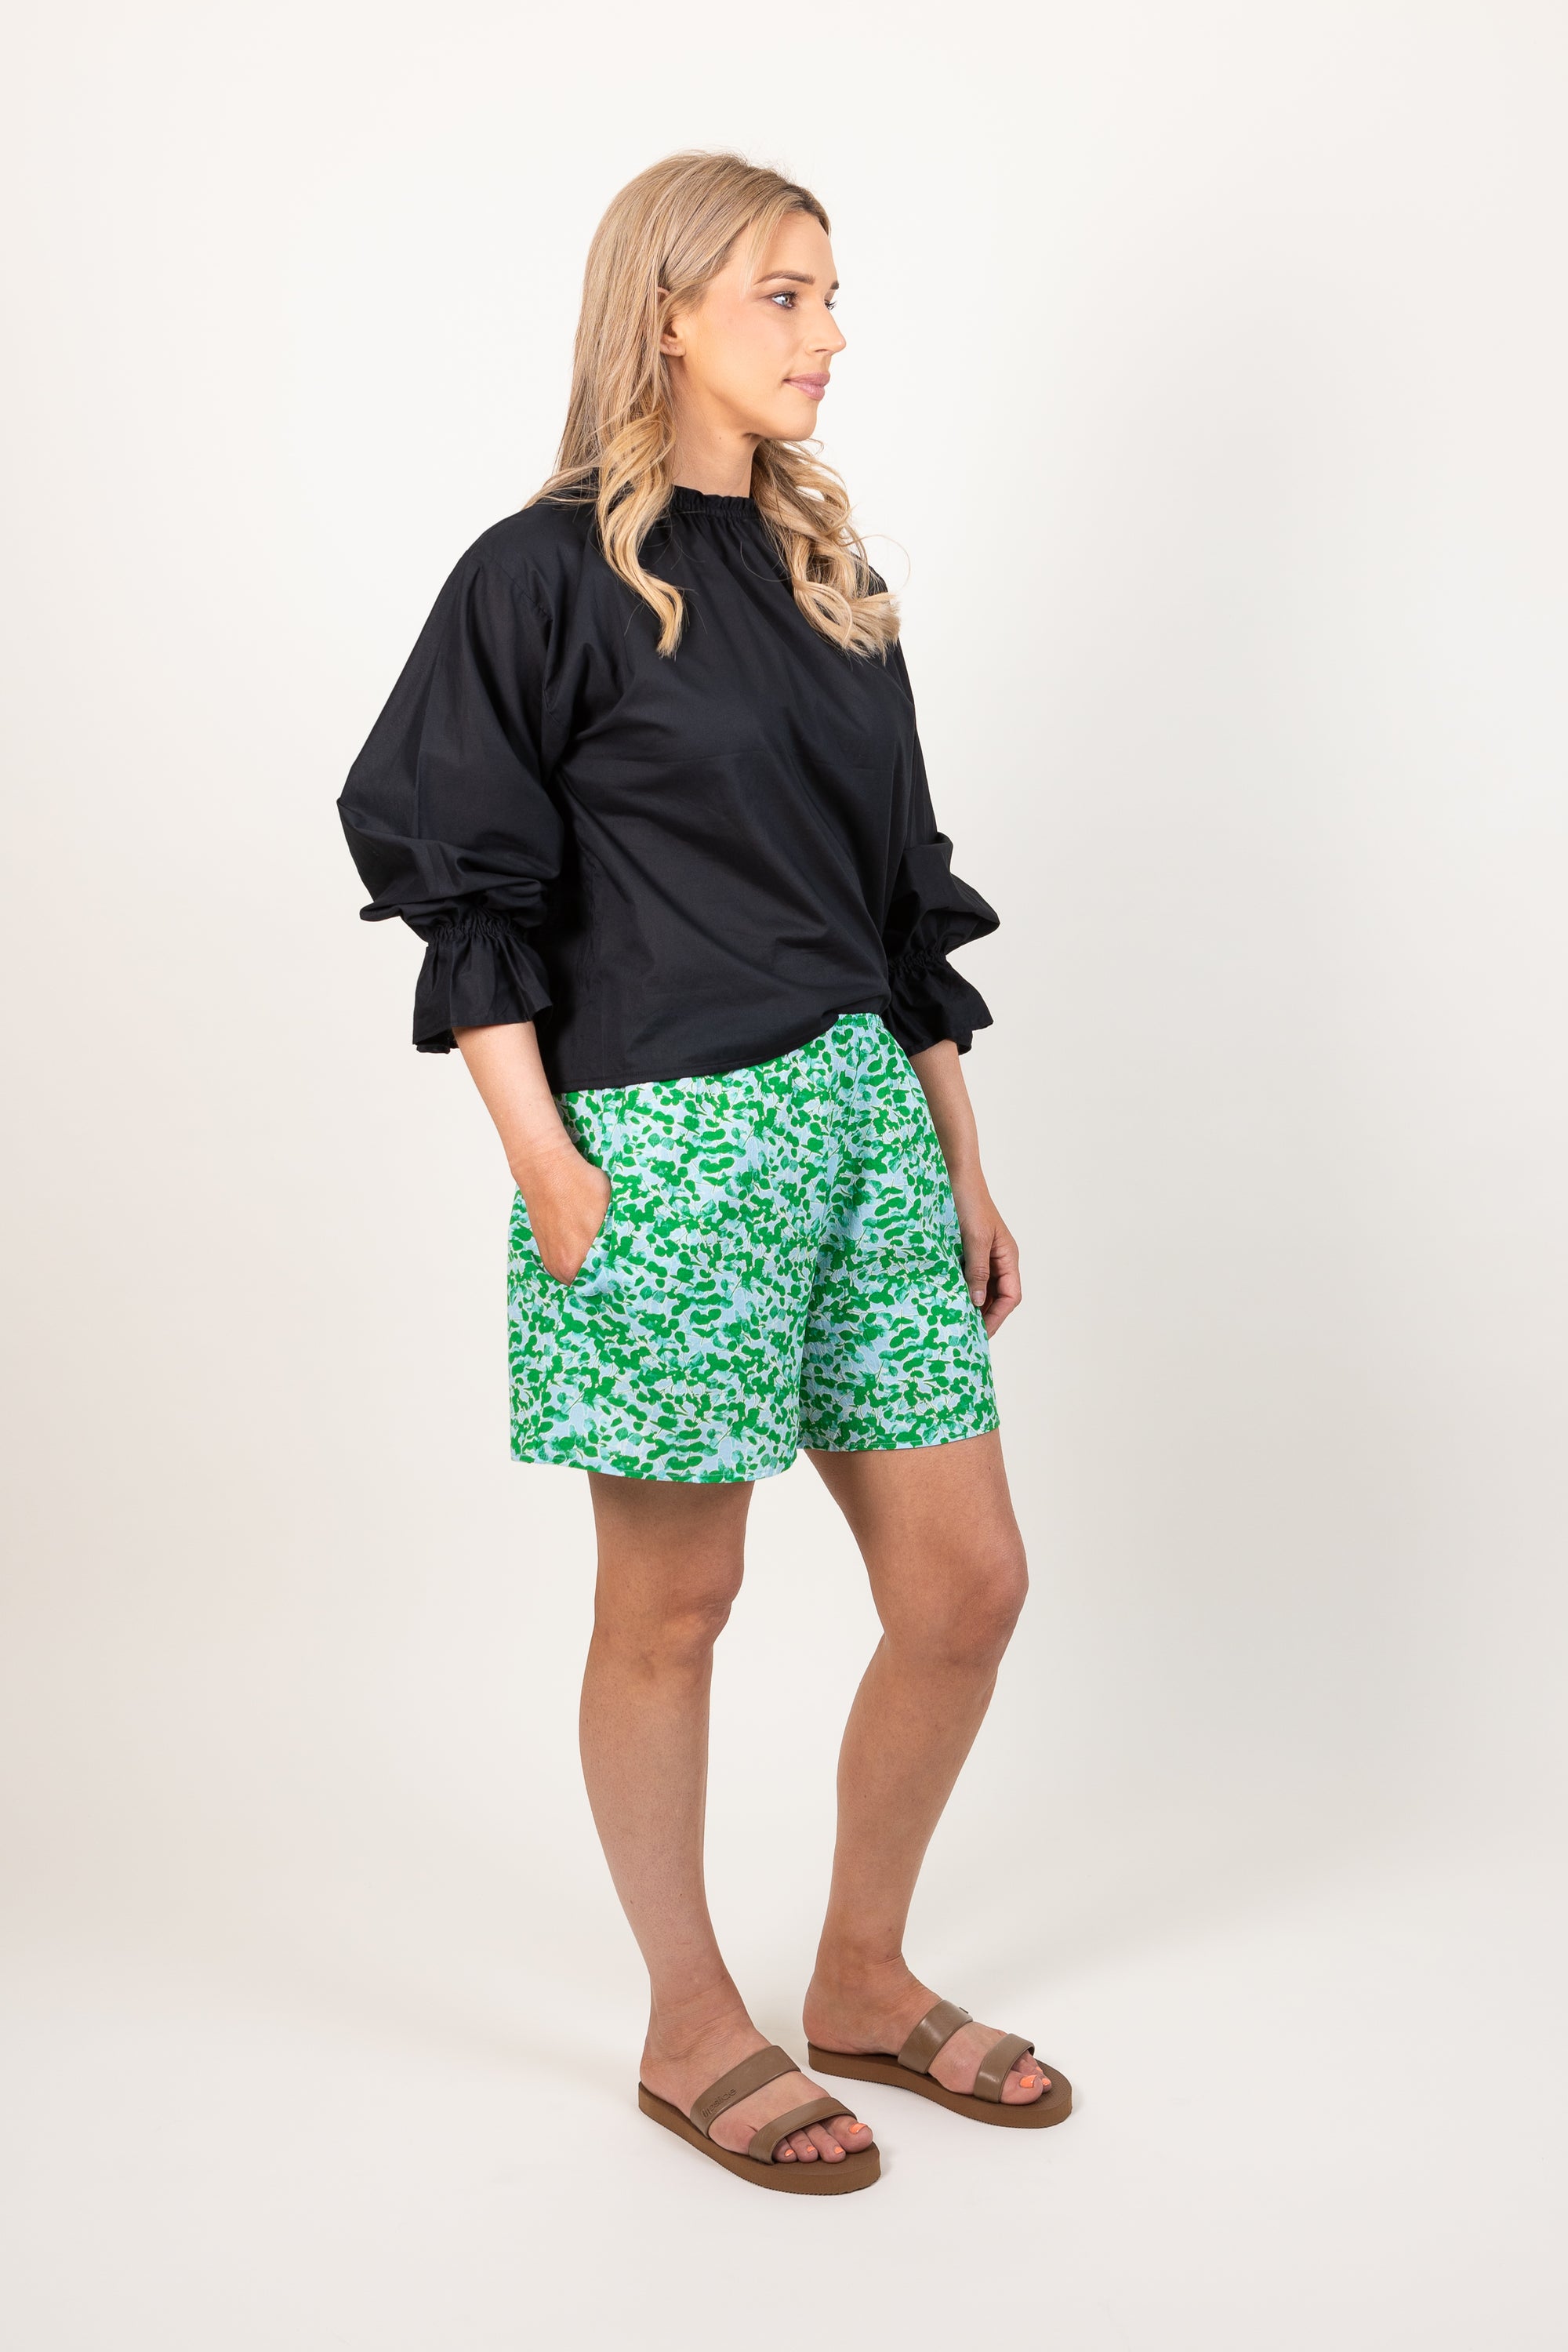 Ames Store Women's Summer Shorts with Pockets Cotton Seersucker